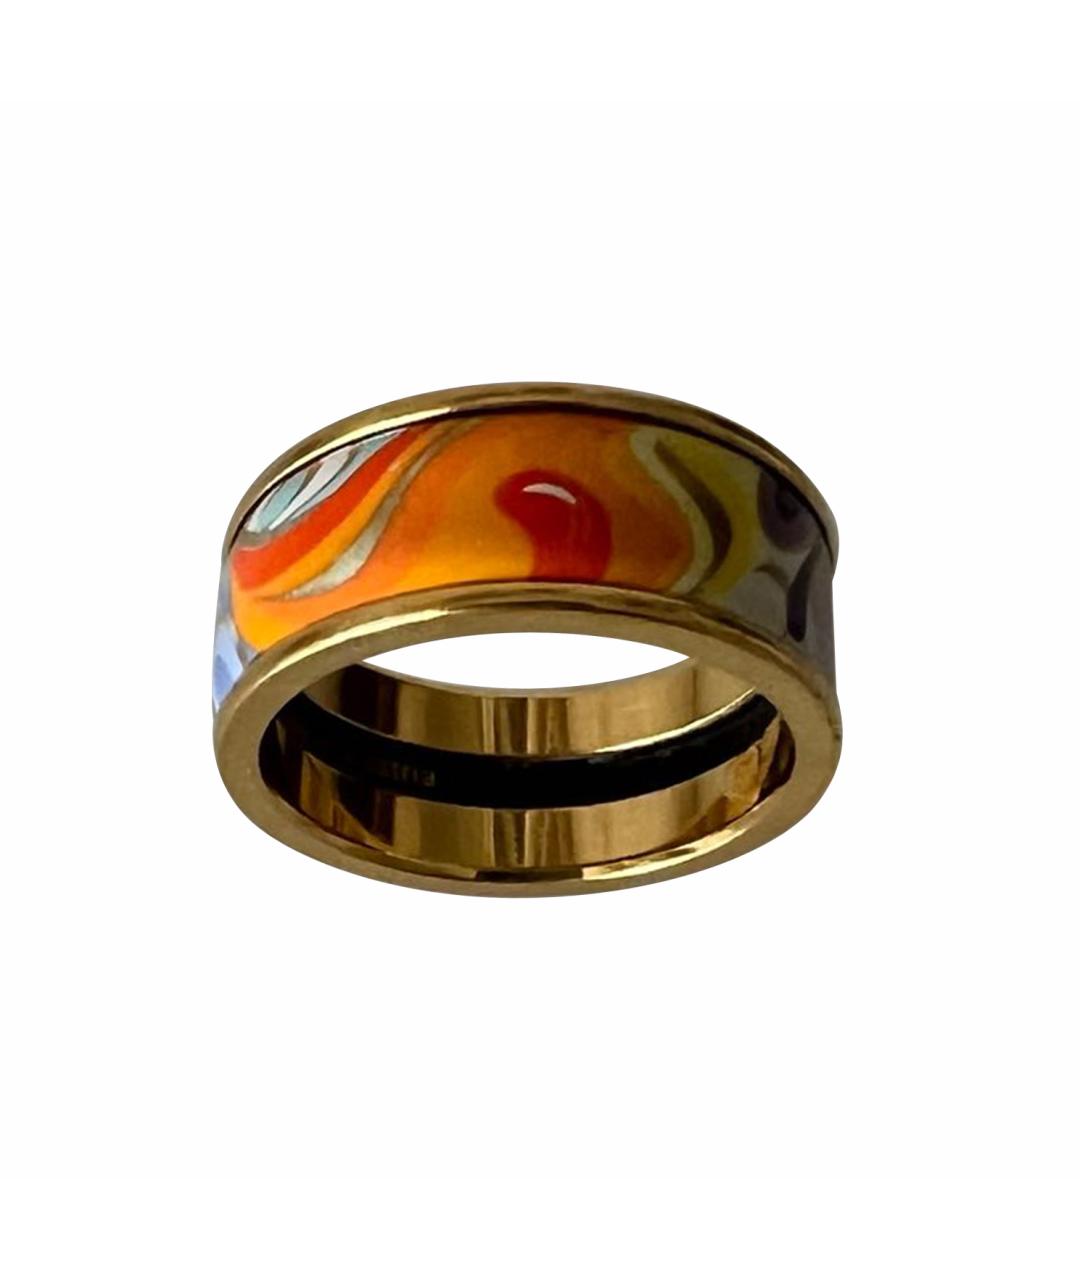 Frey Wille Металлическое кольцо, фото 1